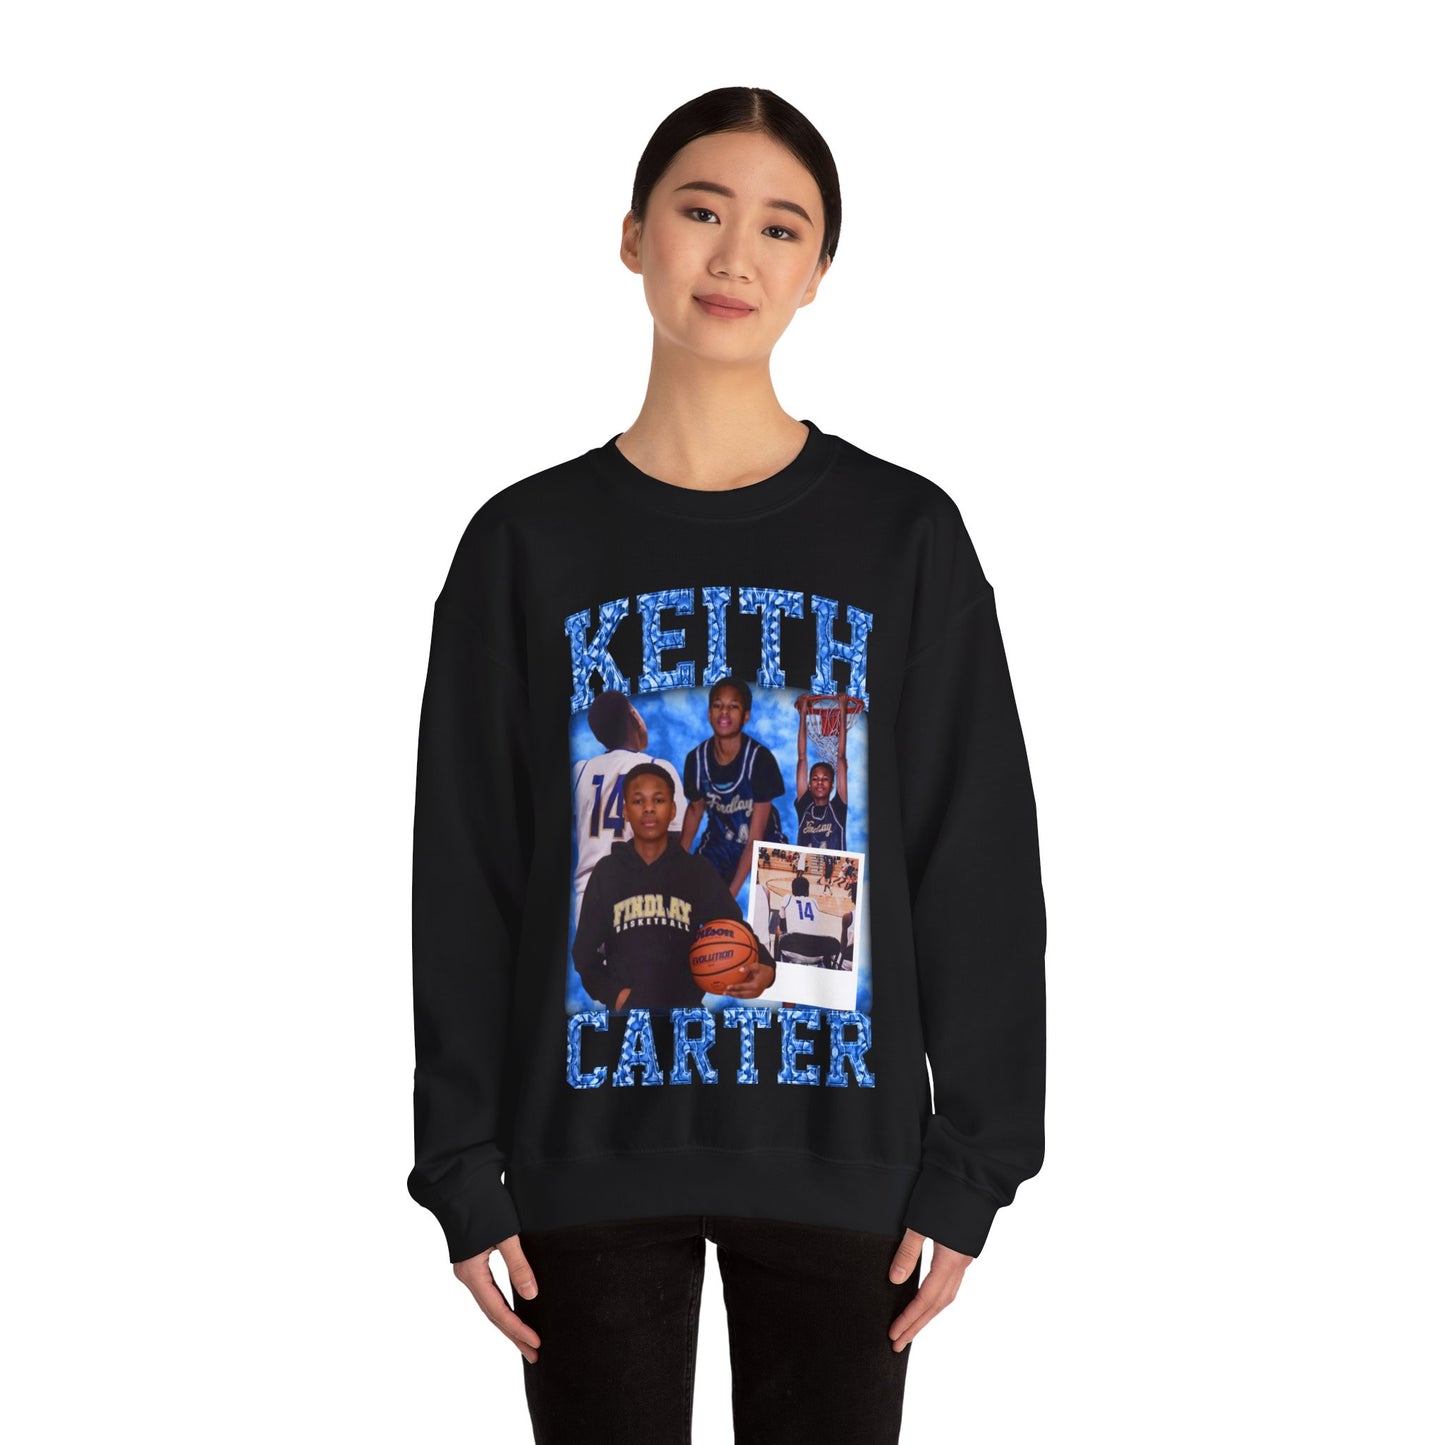 Keith Carter Crewneck Sweatshirt